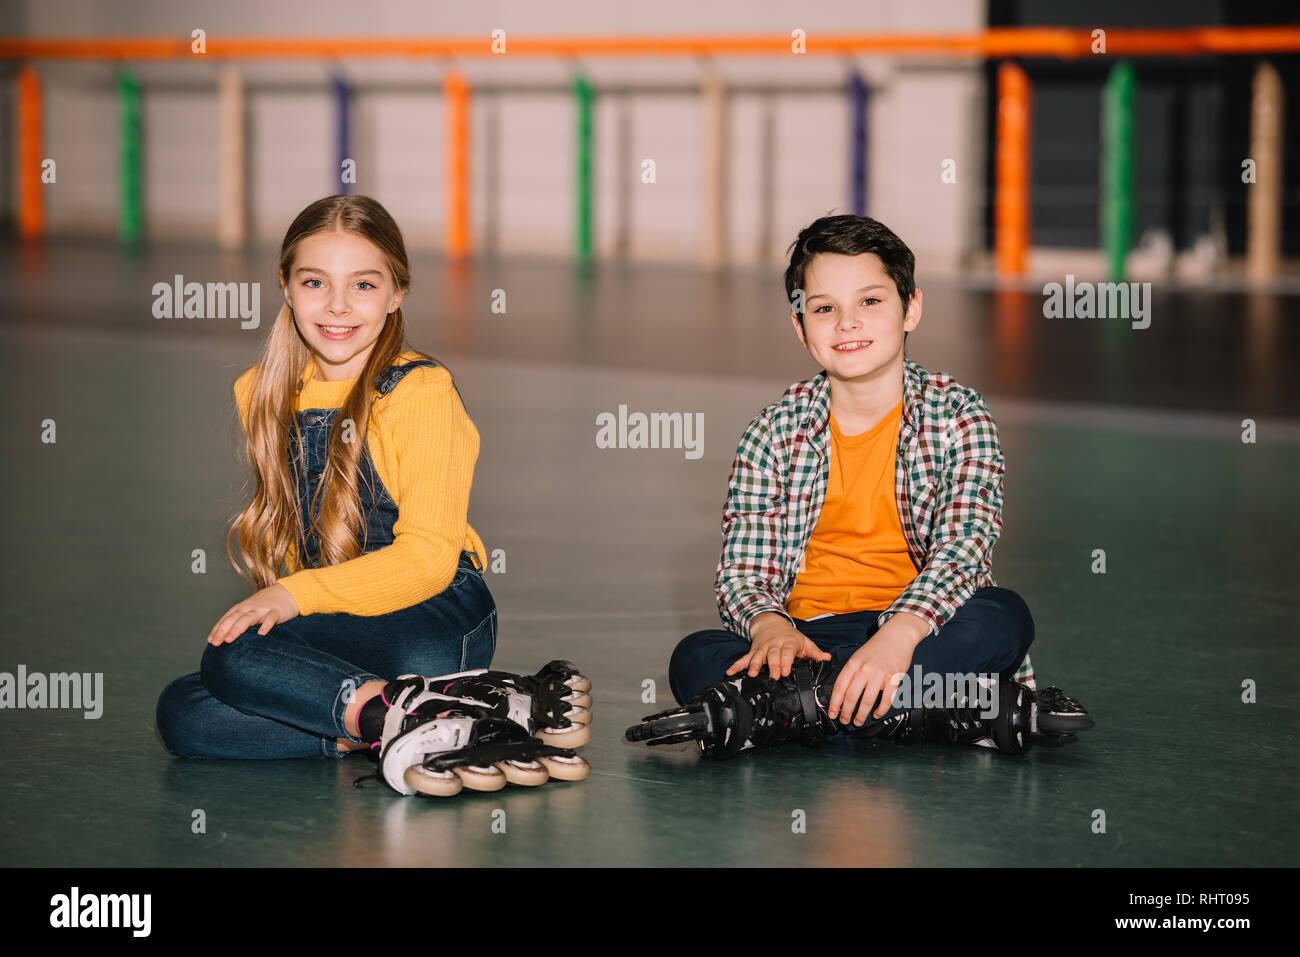 Indoor shot of smiling kids in roller skates having fun together Stock Photo